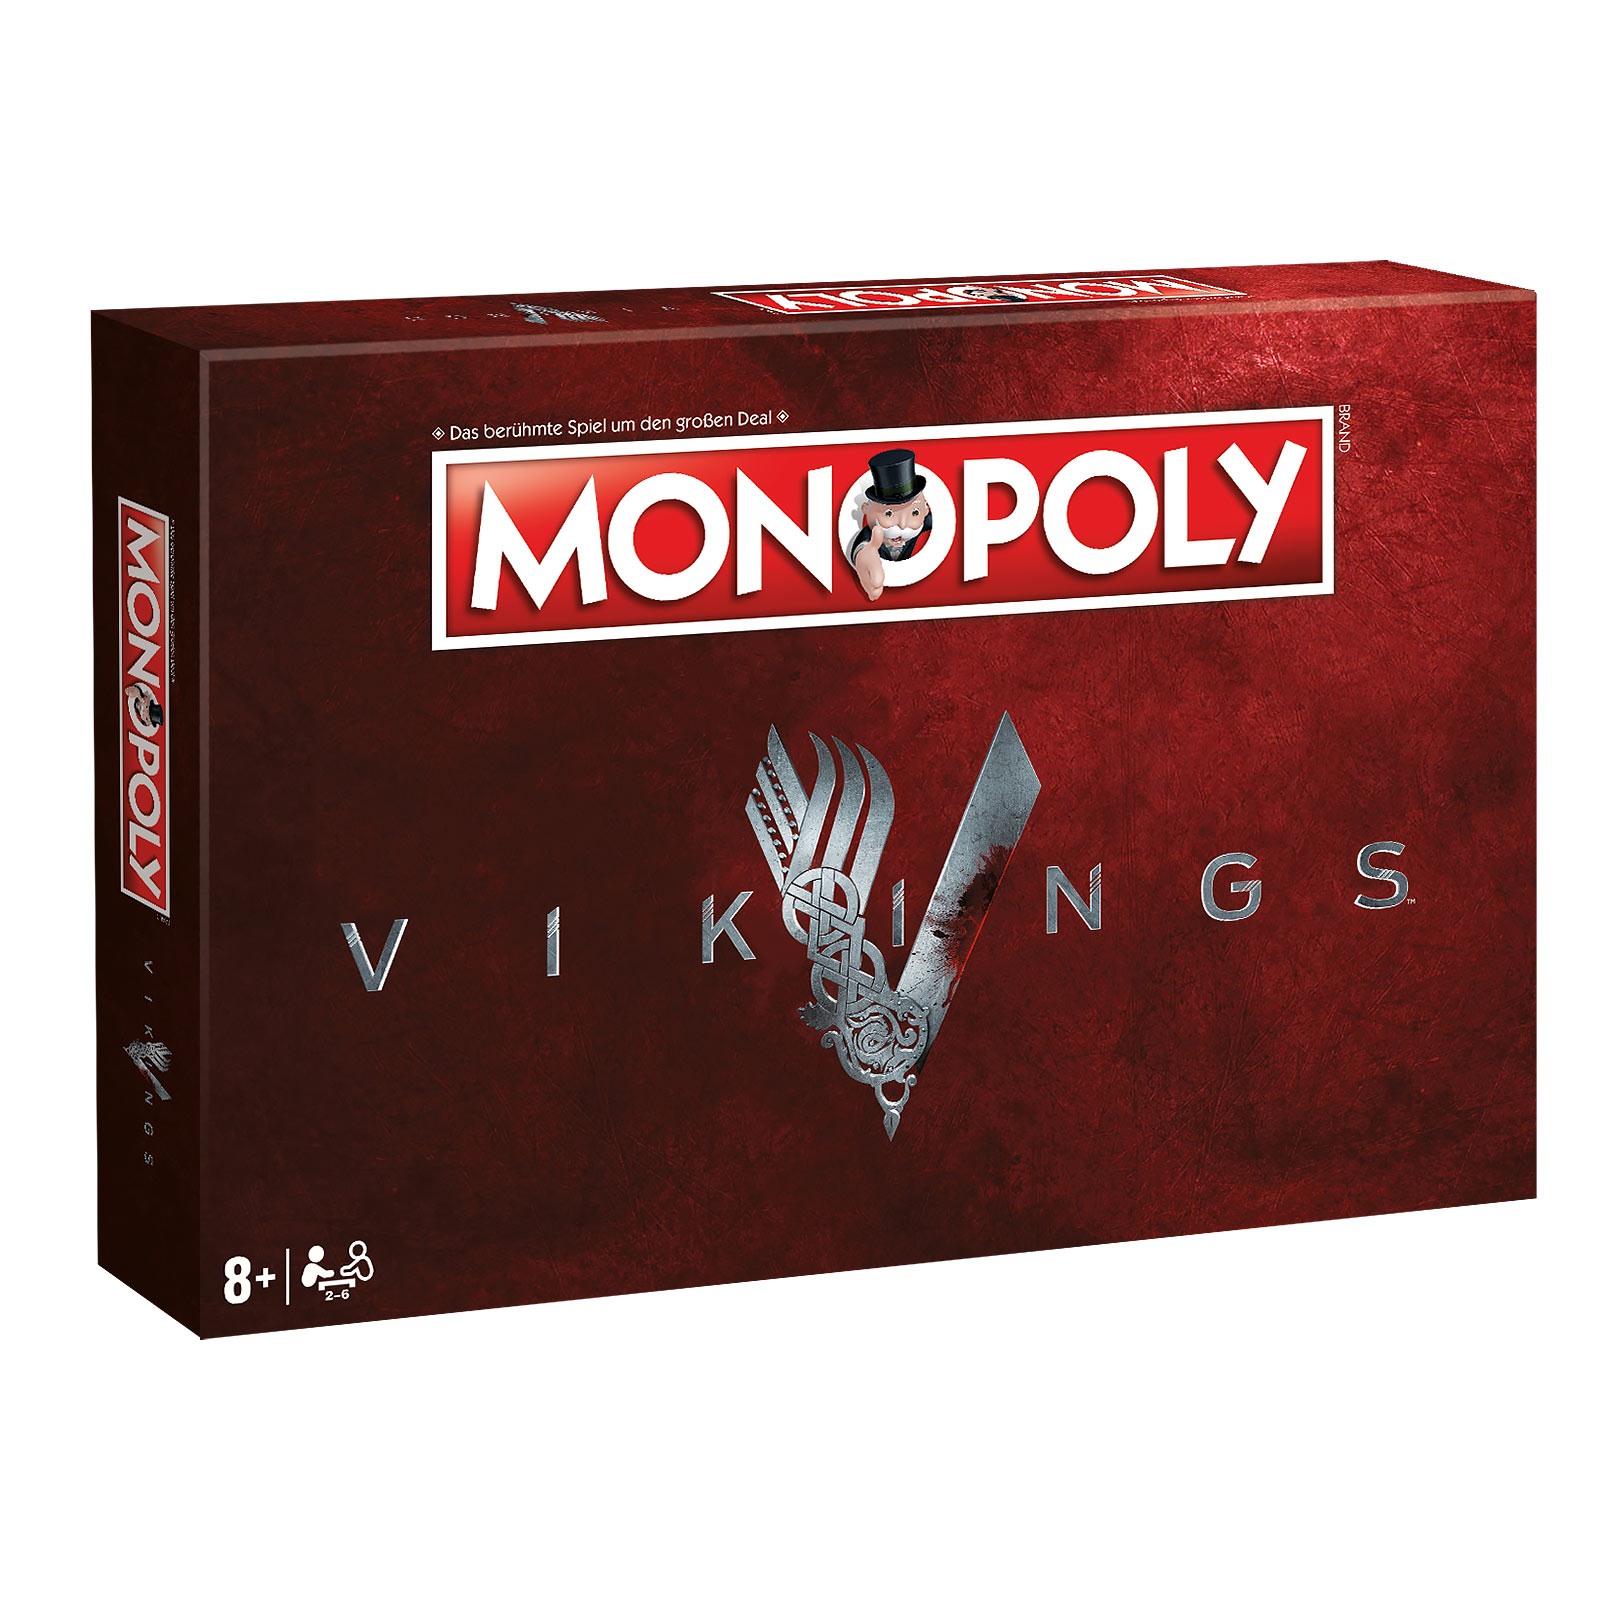 Vikings - Monopoly